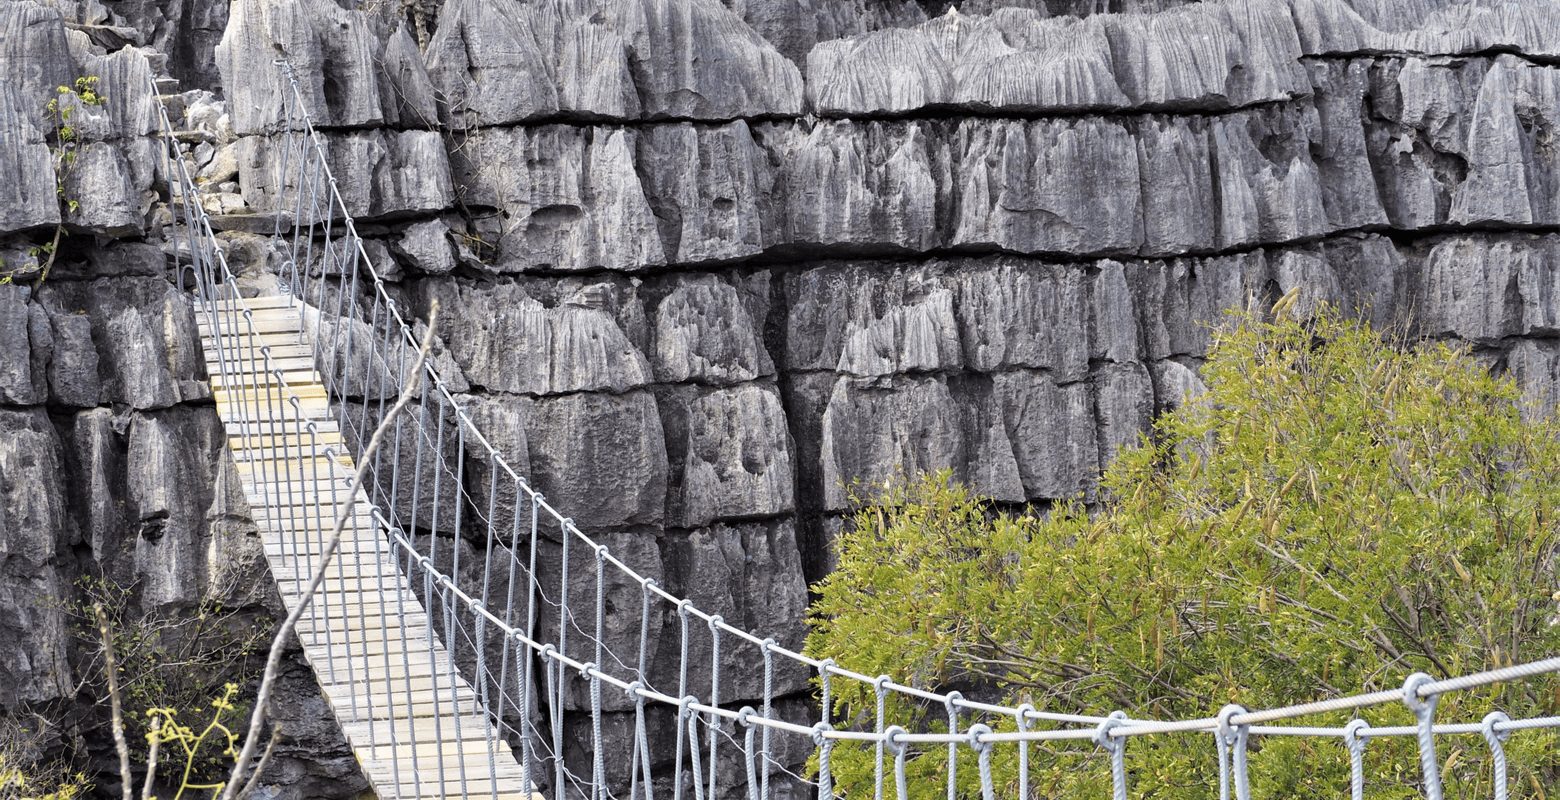 For a piece on Ankarana National park, a bridge leads to a rock expanse